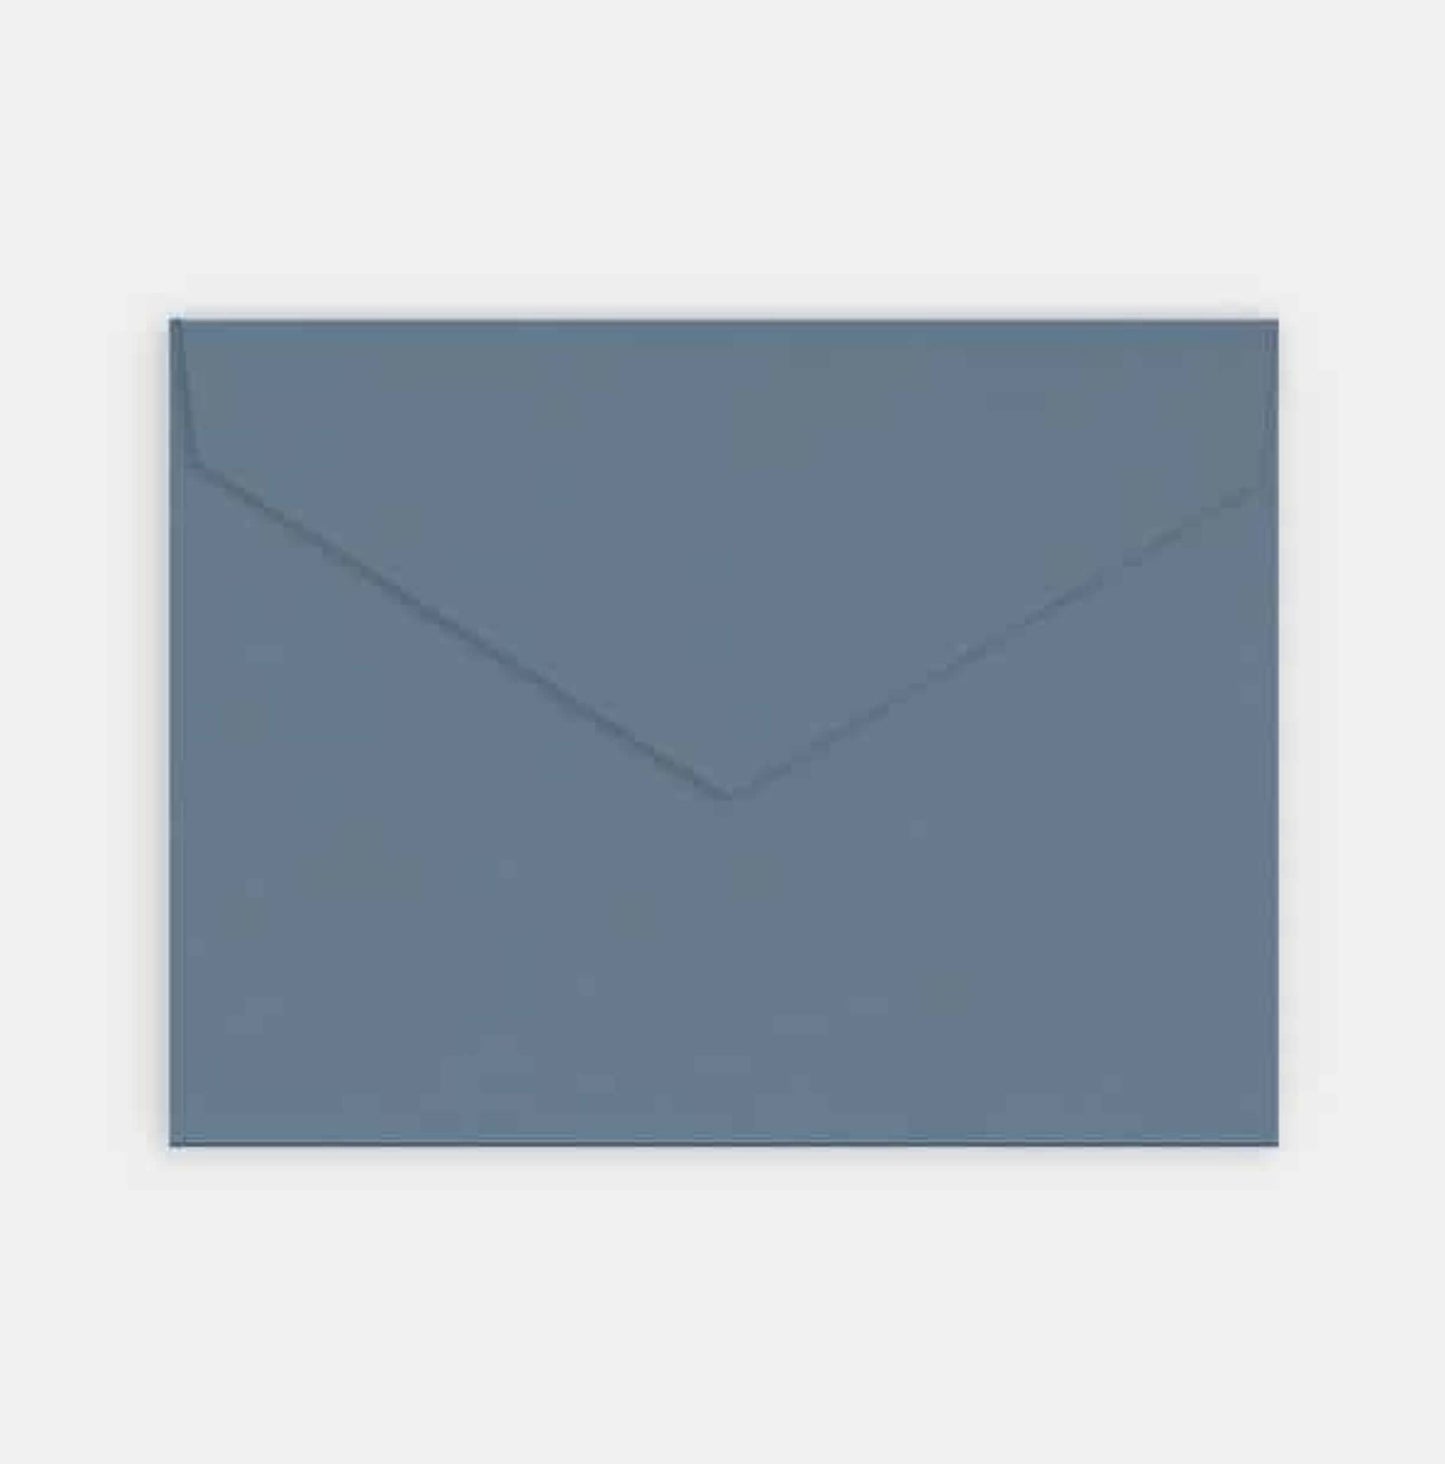 Coloured envelopes - Unik by Nature